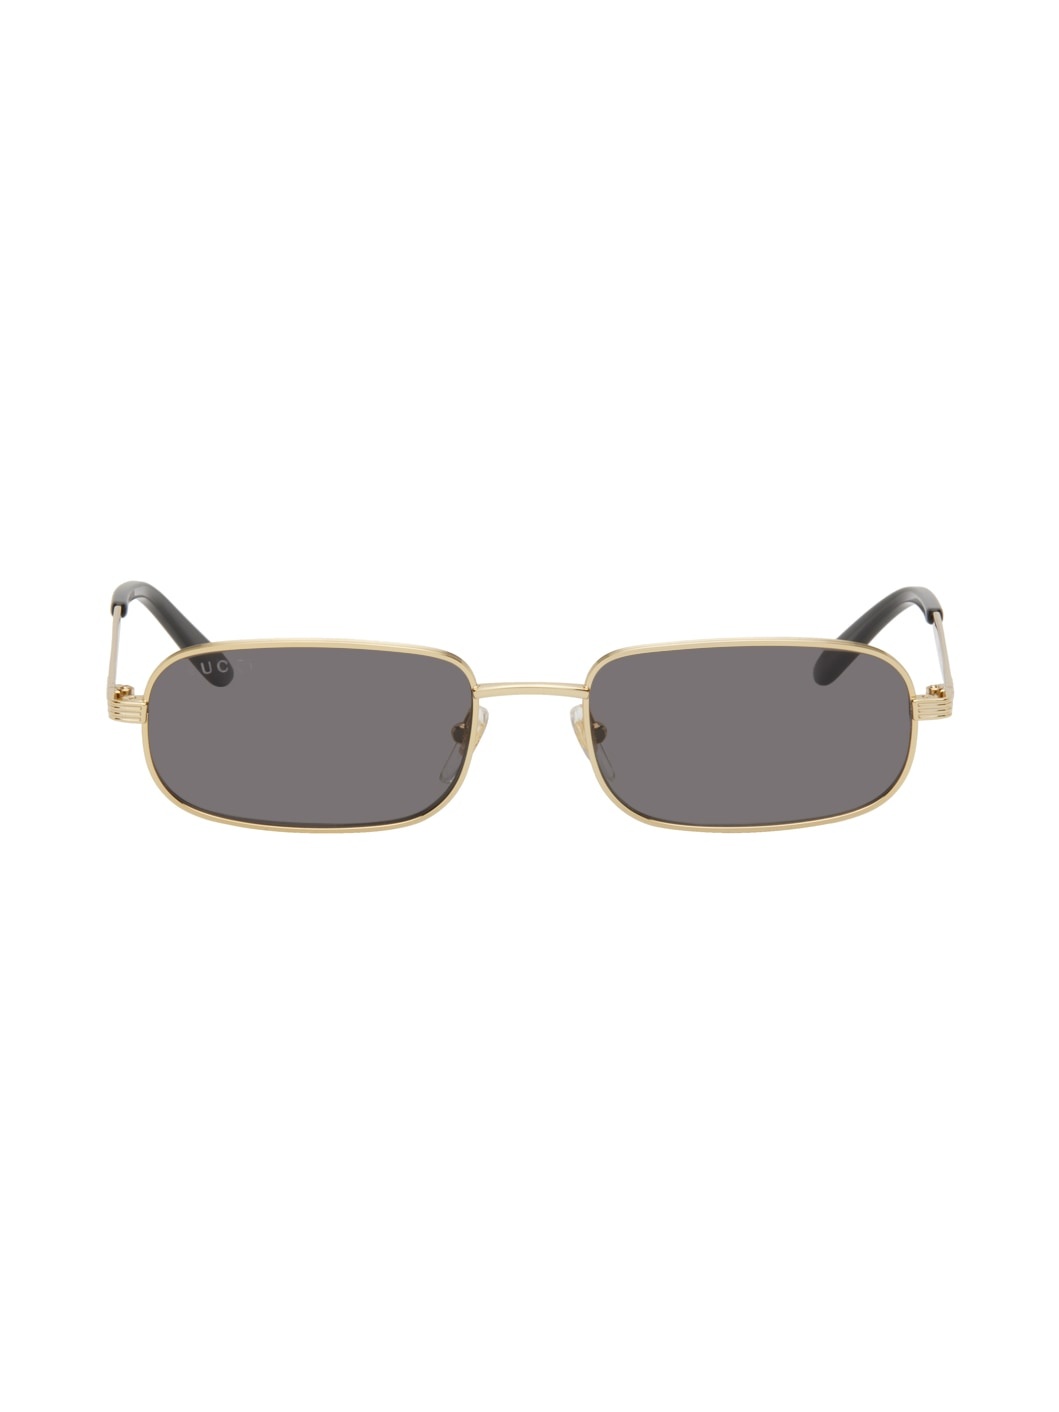 Gold Rectangular Sunglasses - 1